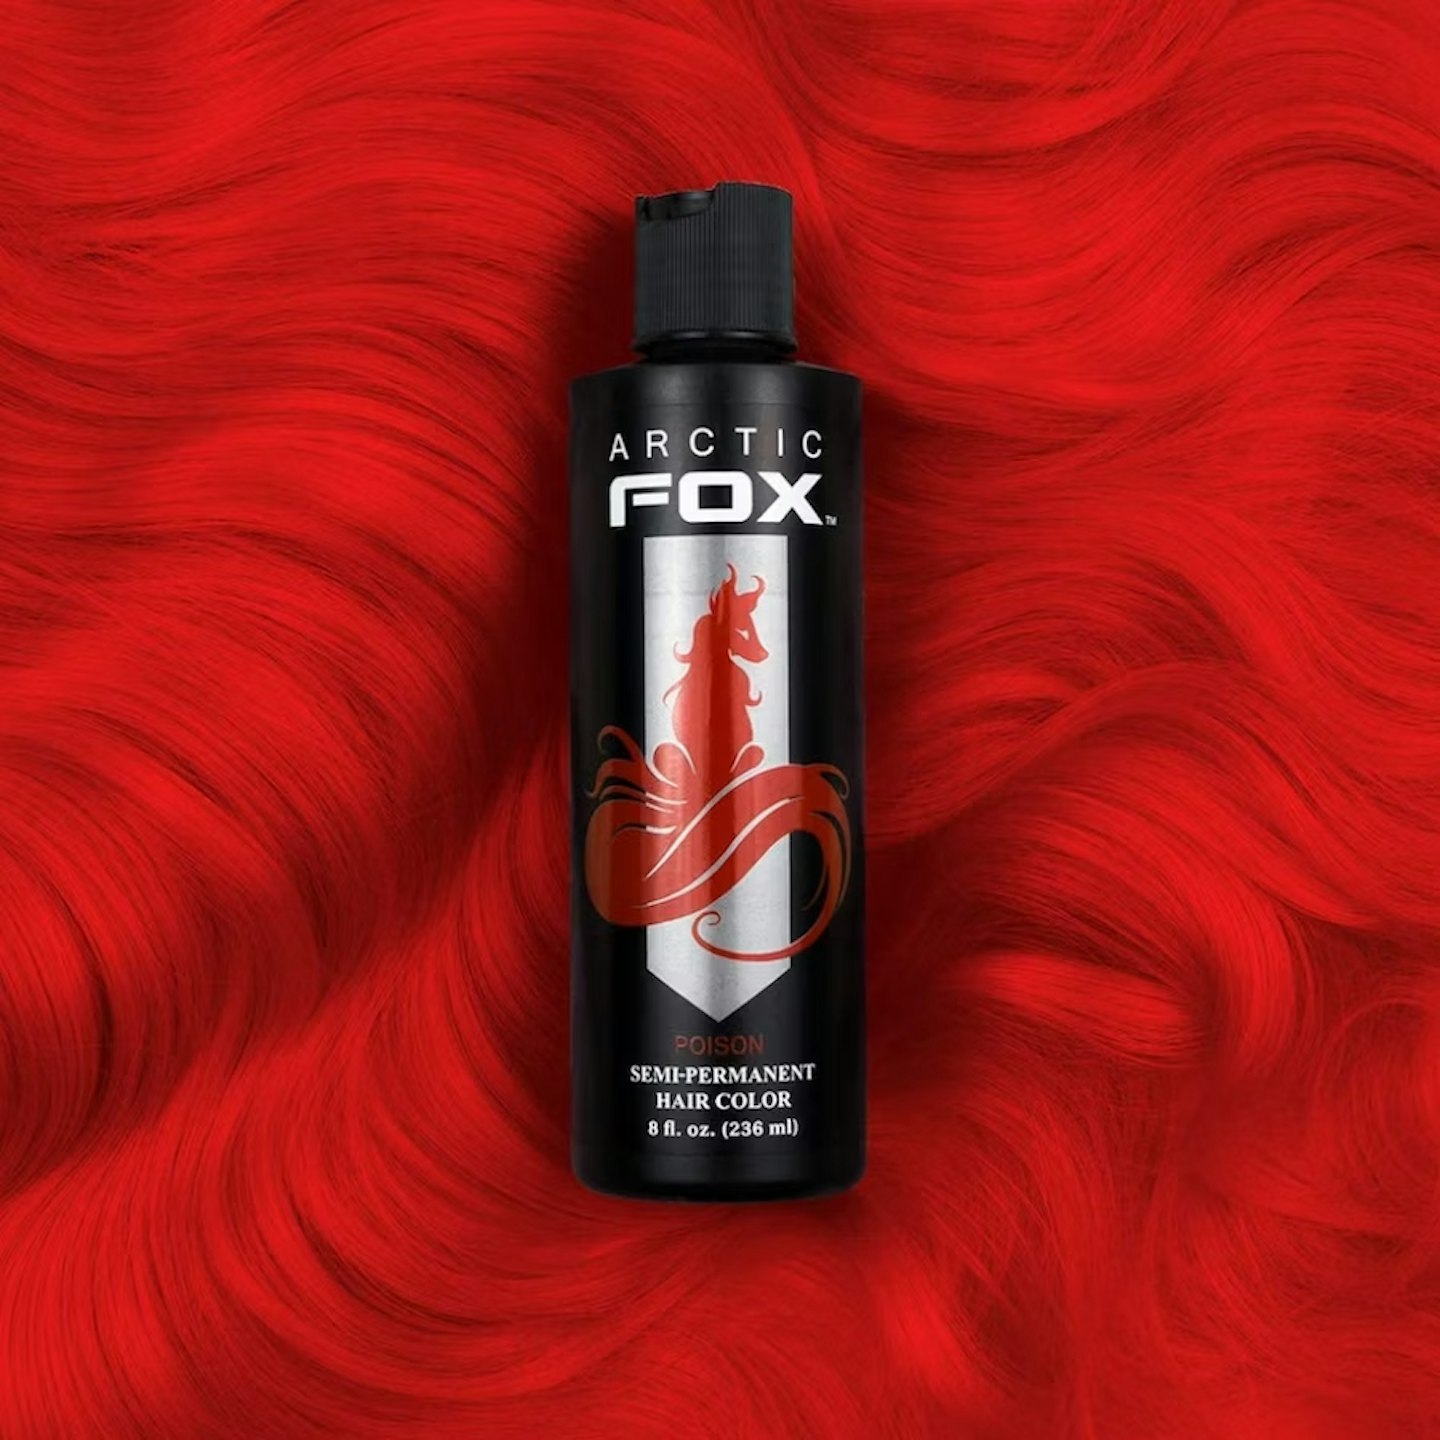 Arctic Fox Vegan and Cruelty-Free Semi-Permanent Hair Color Dye, Poison